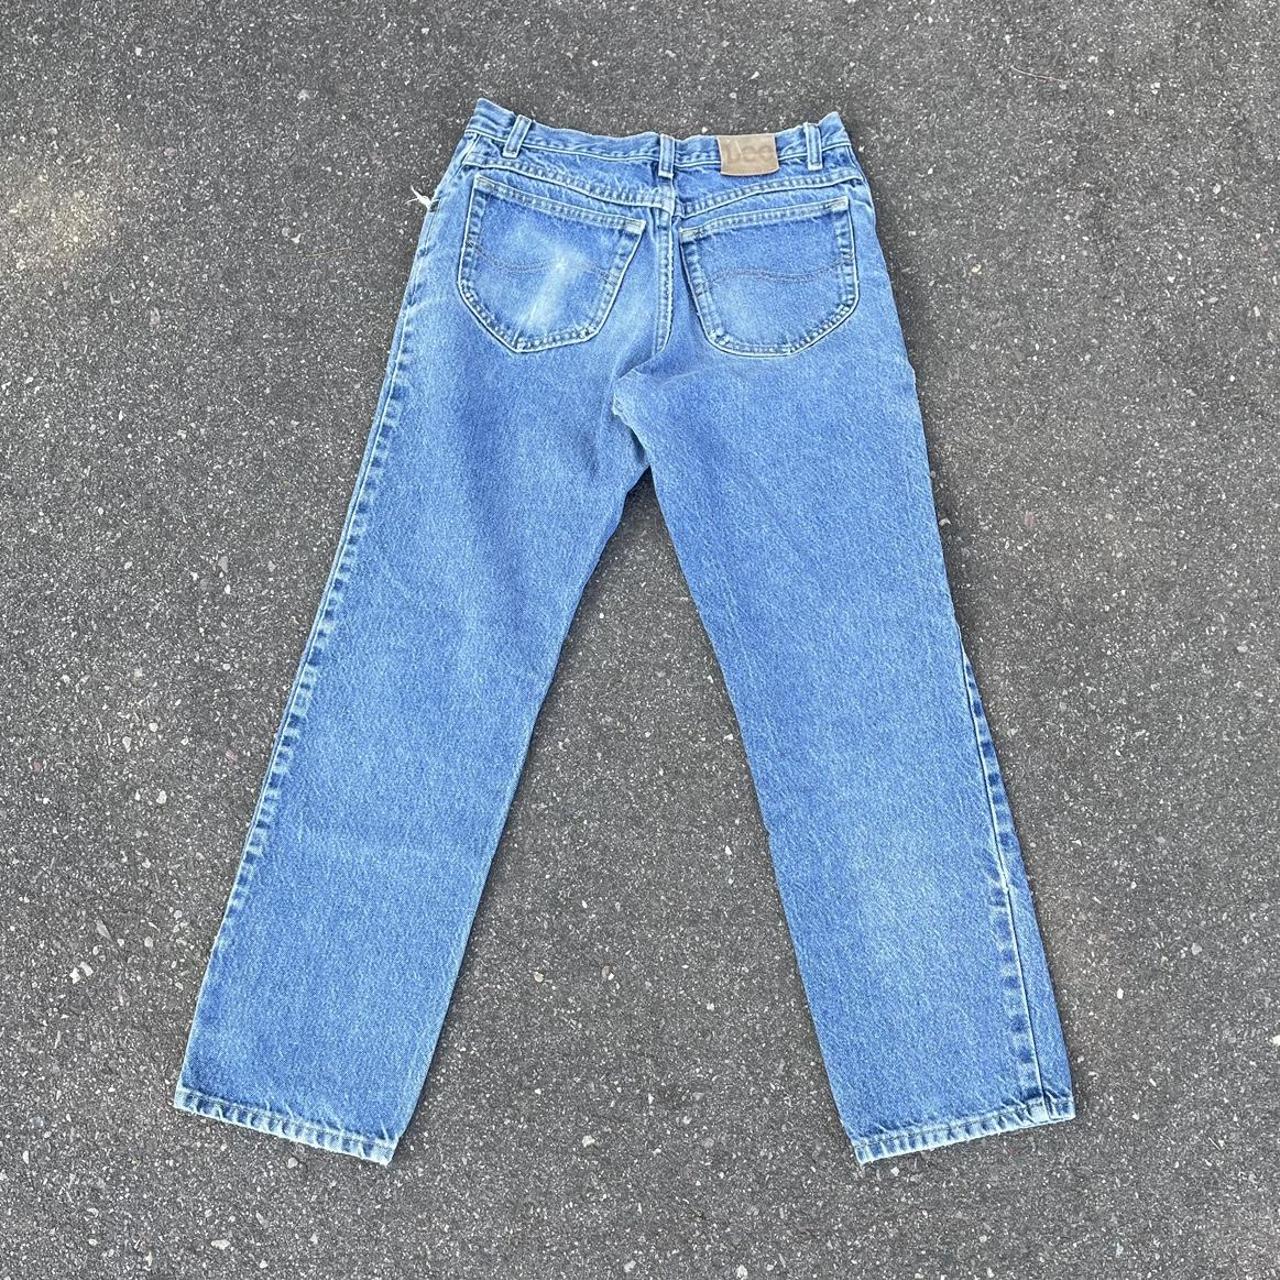 Lee Jeans - Size 31x30 - Super Clean Pair Of Jeans... - Depop